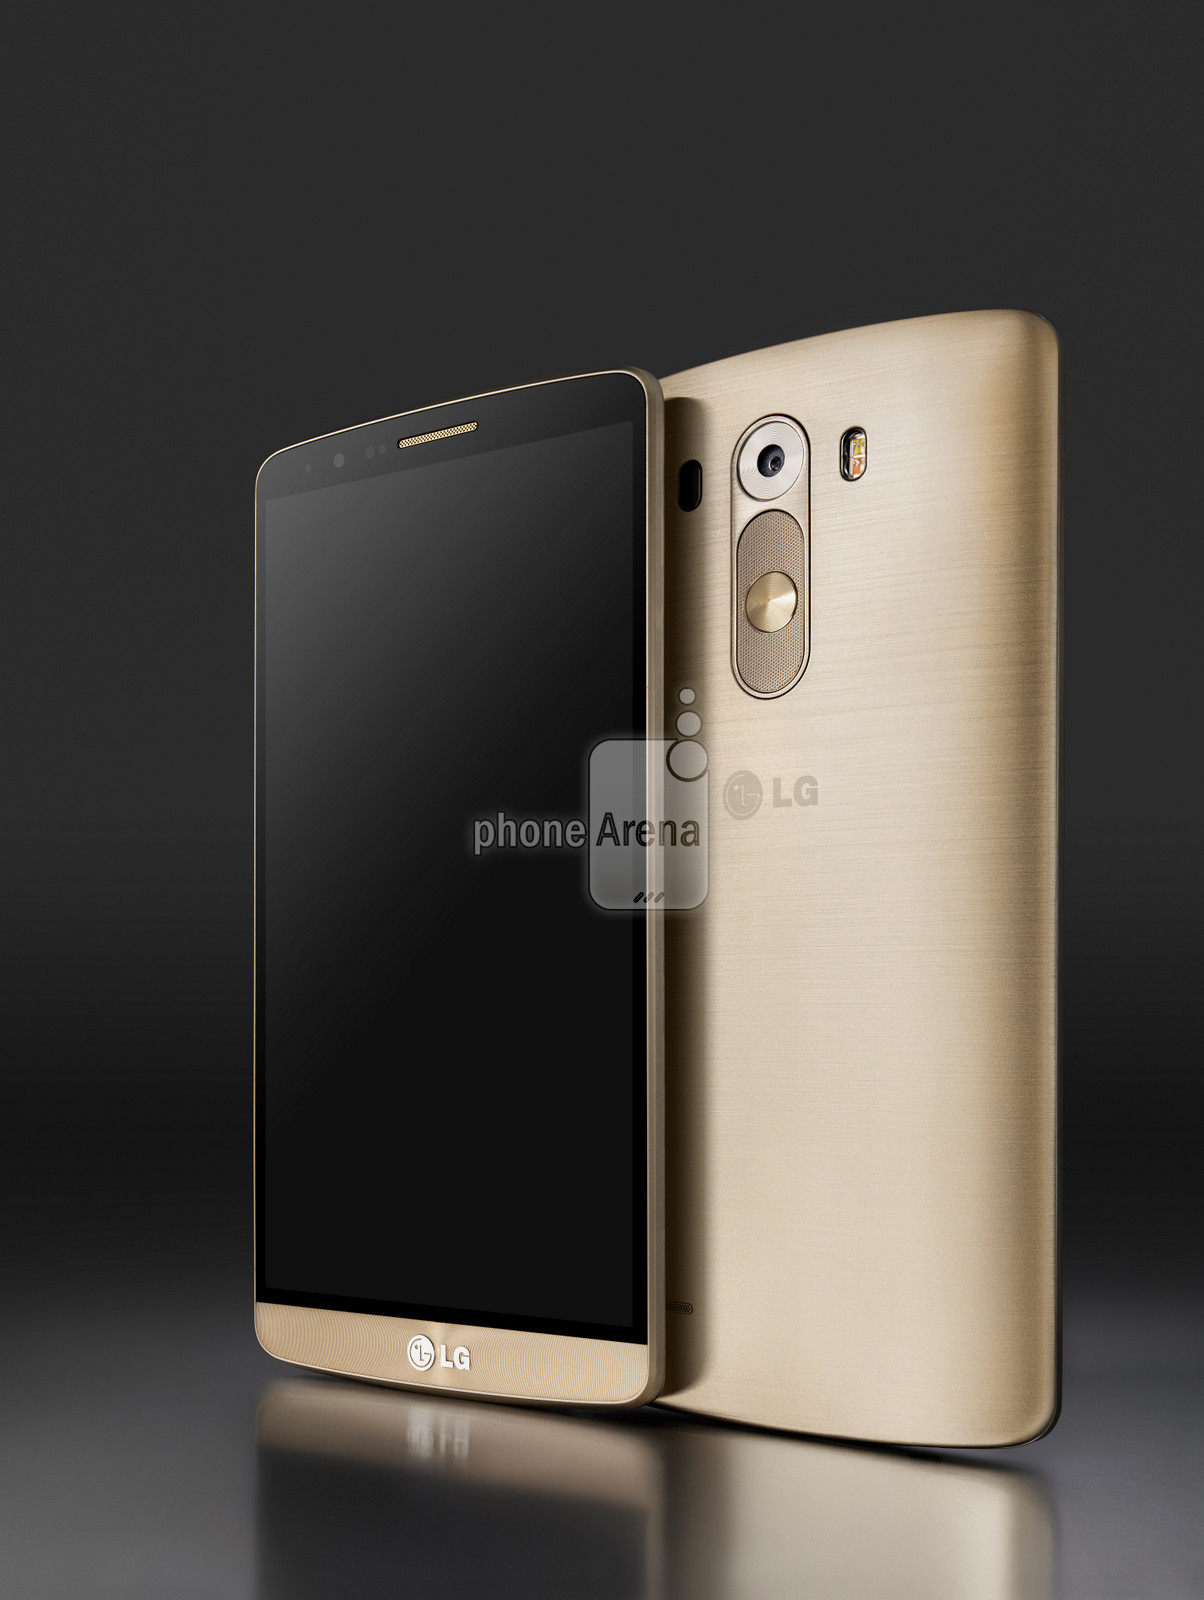 LG G3 press renders appear 4